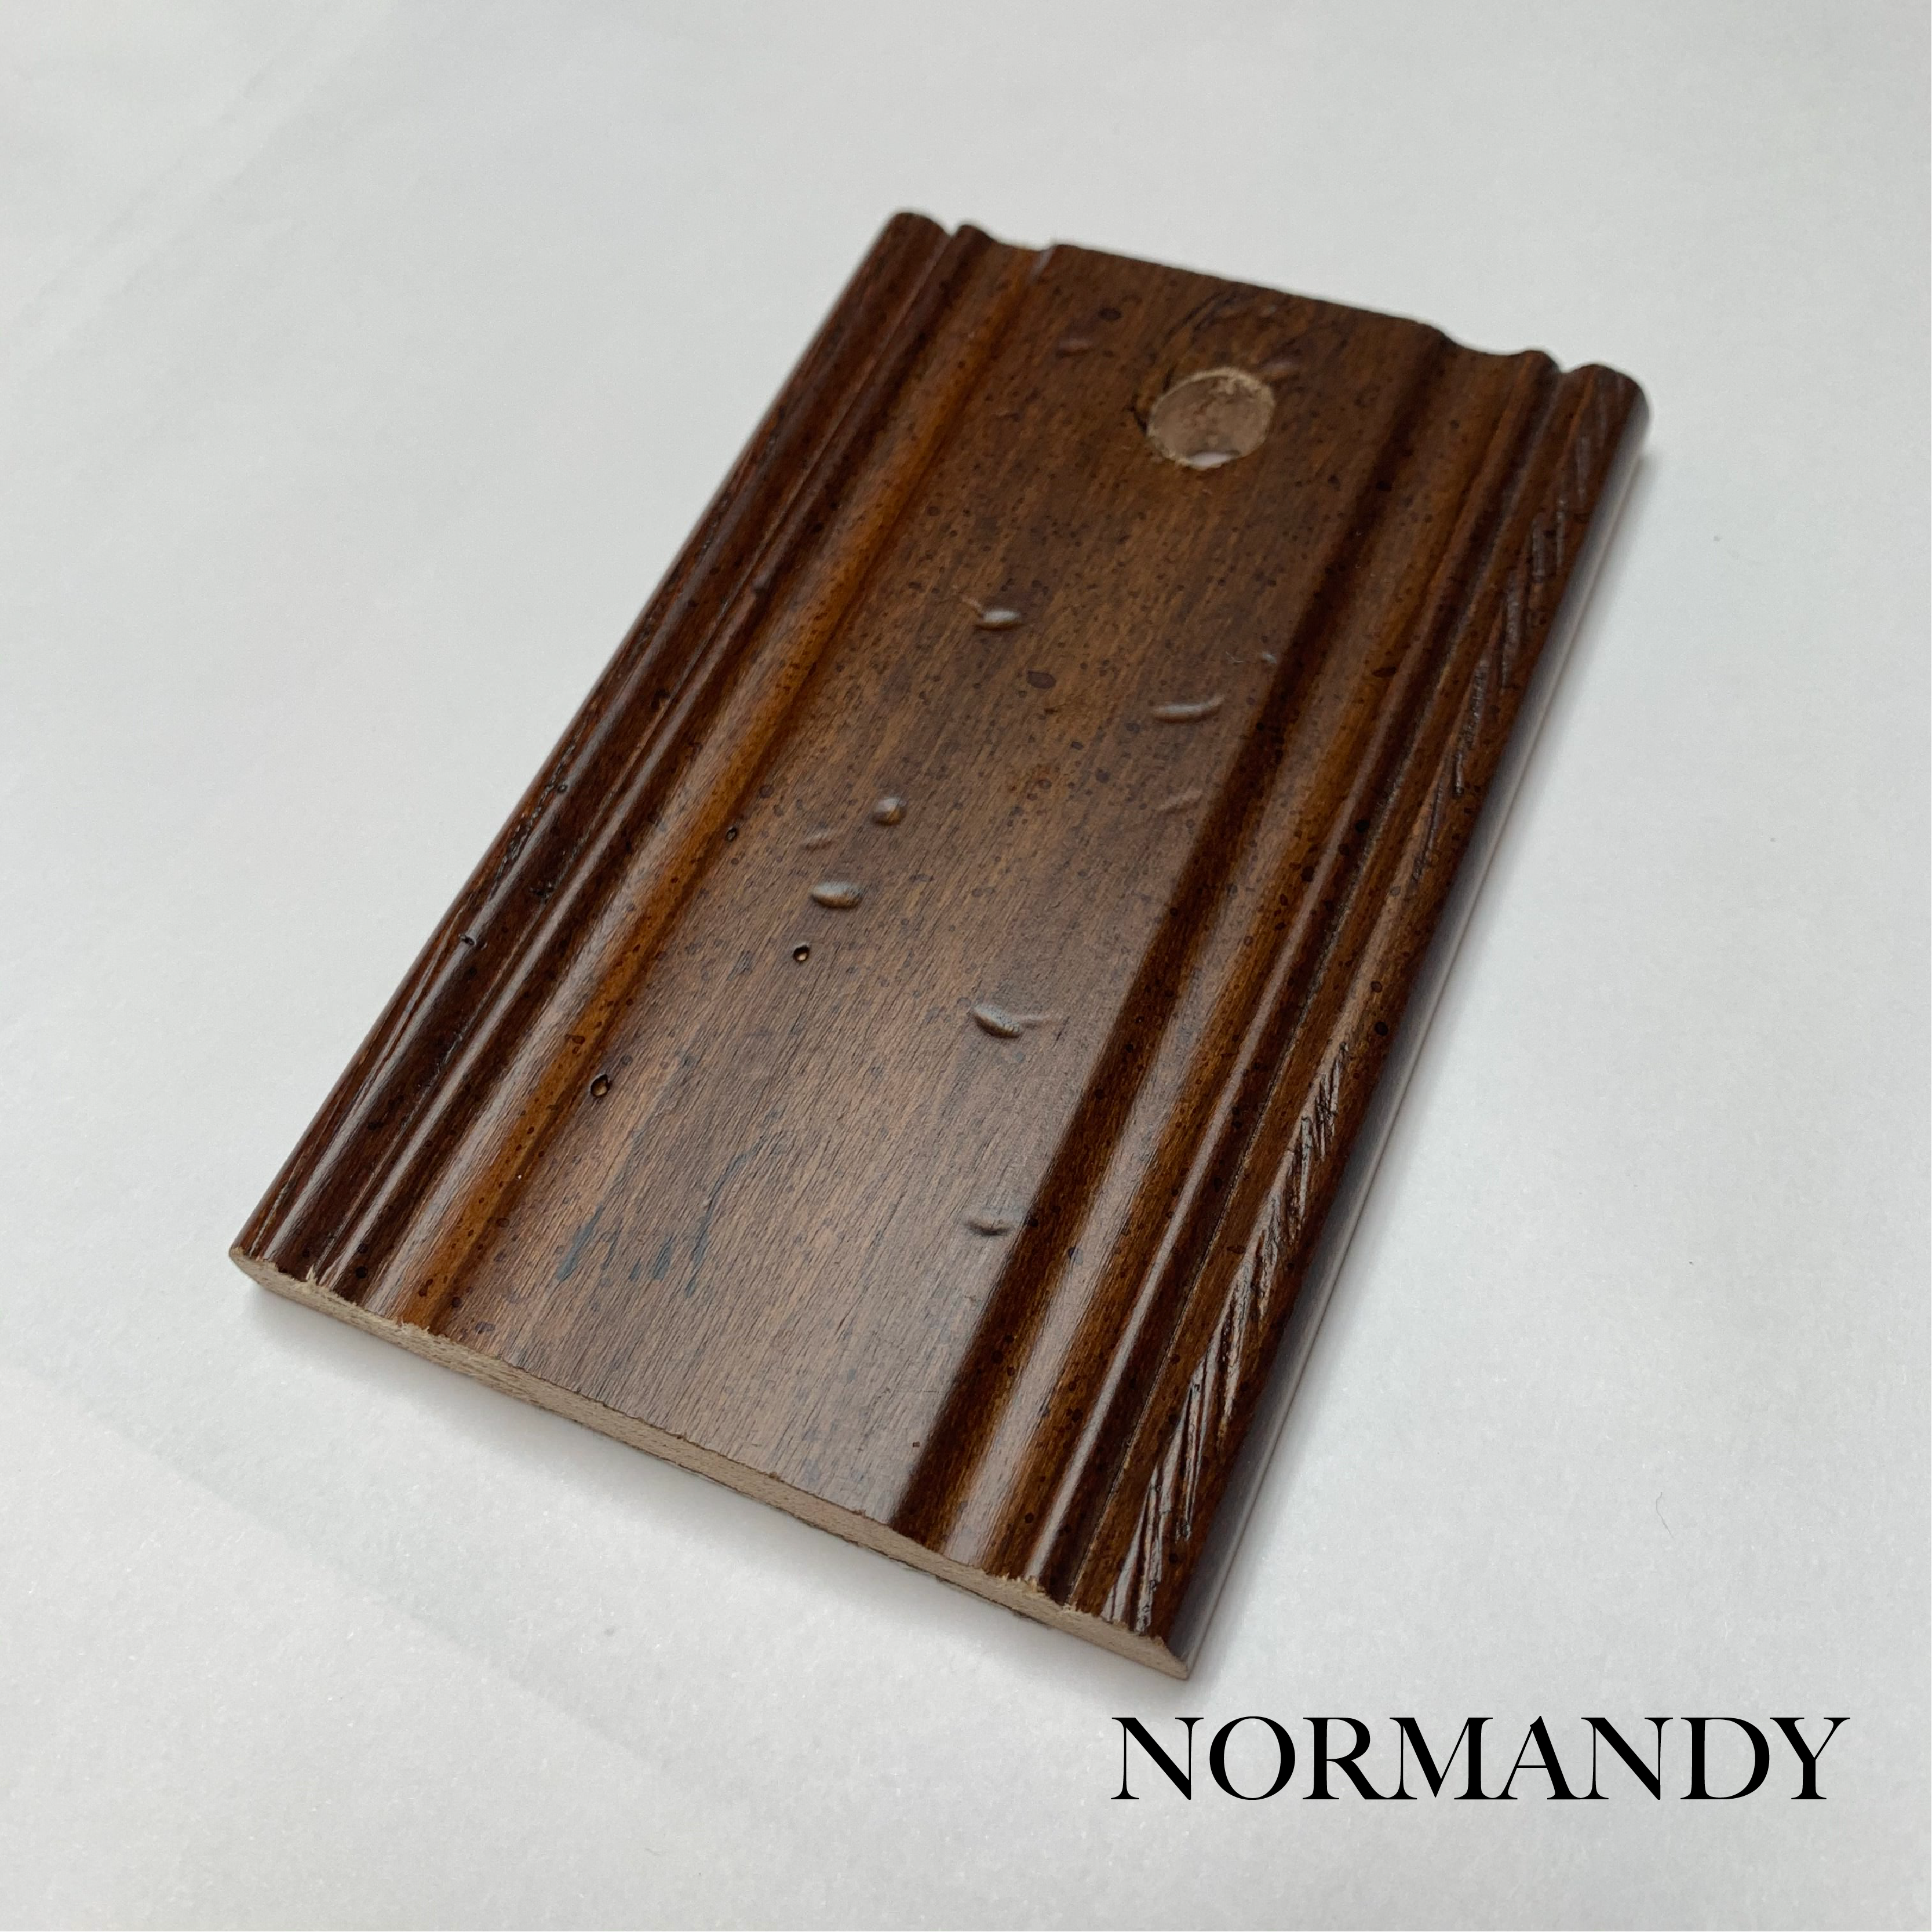 Normandy wood finish sample